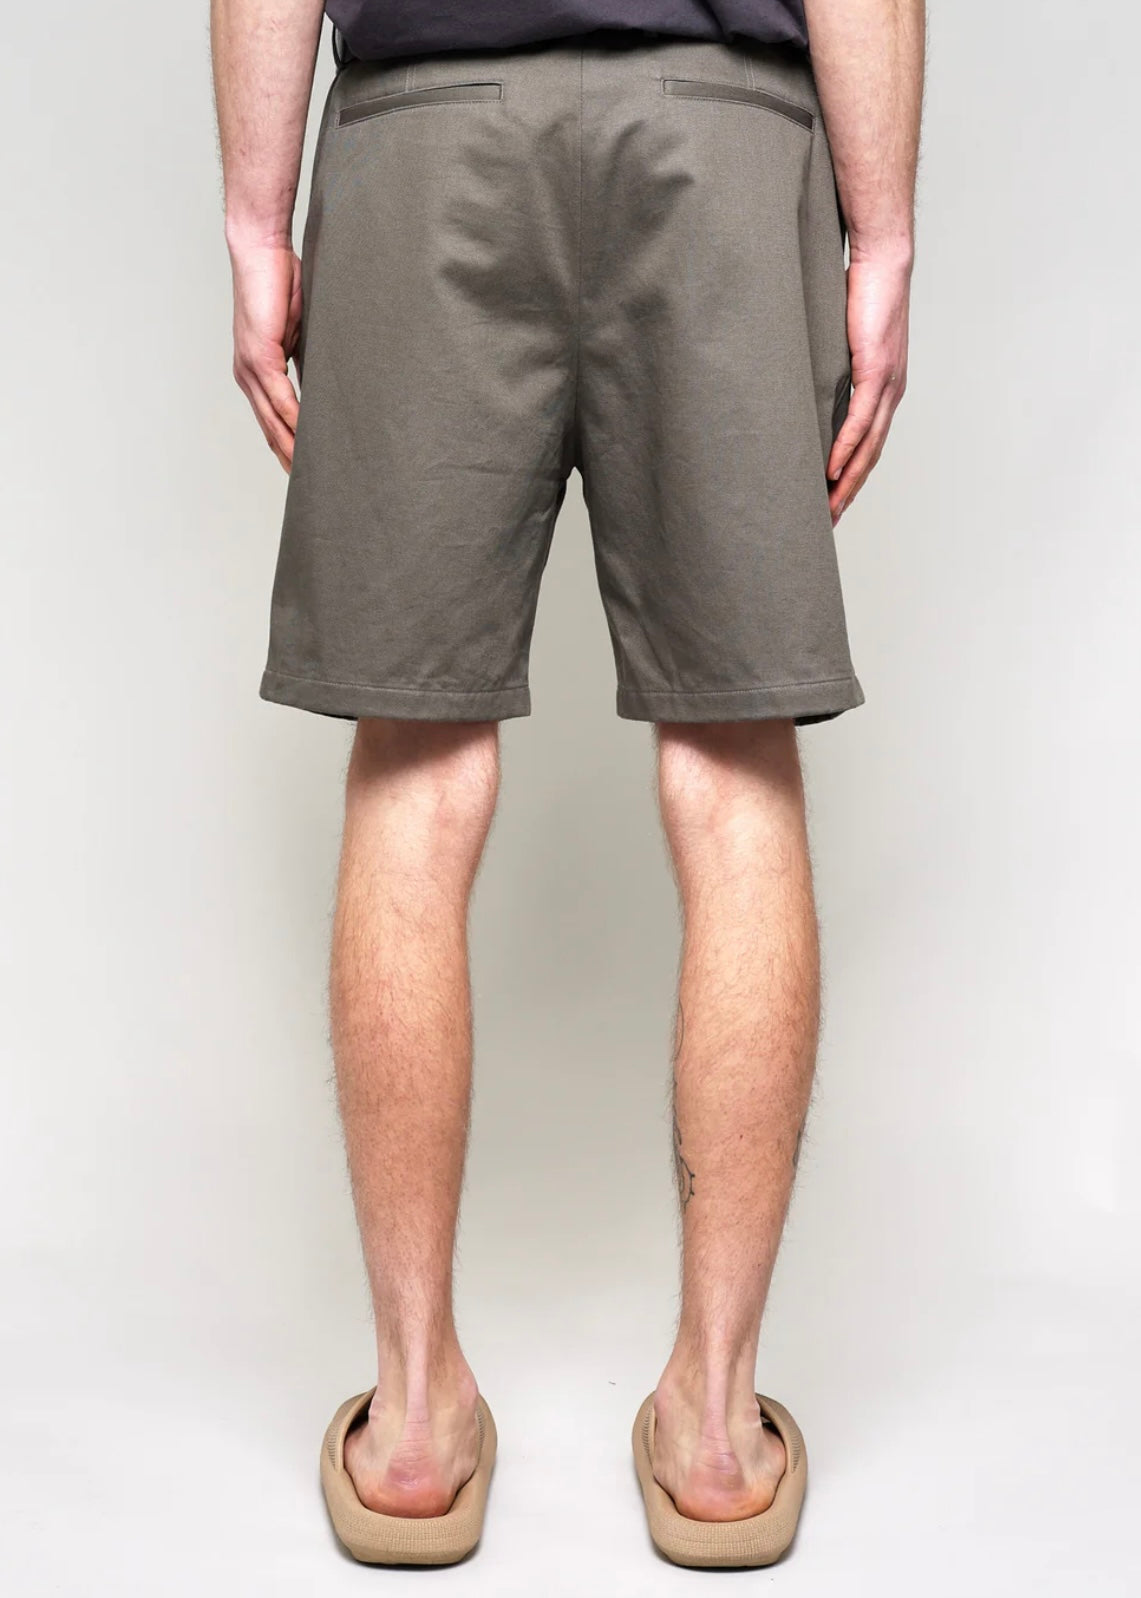 Japanese Chino Shorts 20s Chino Cloth